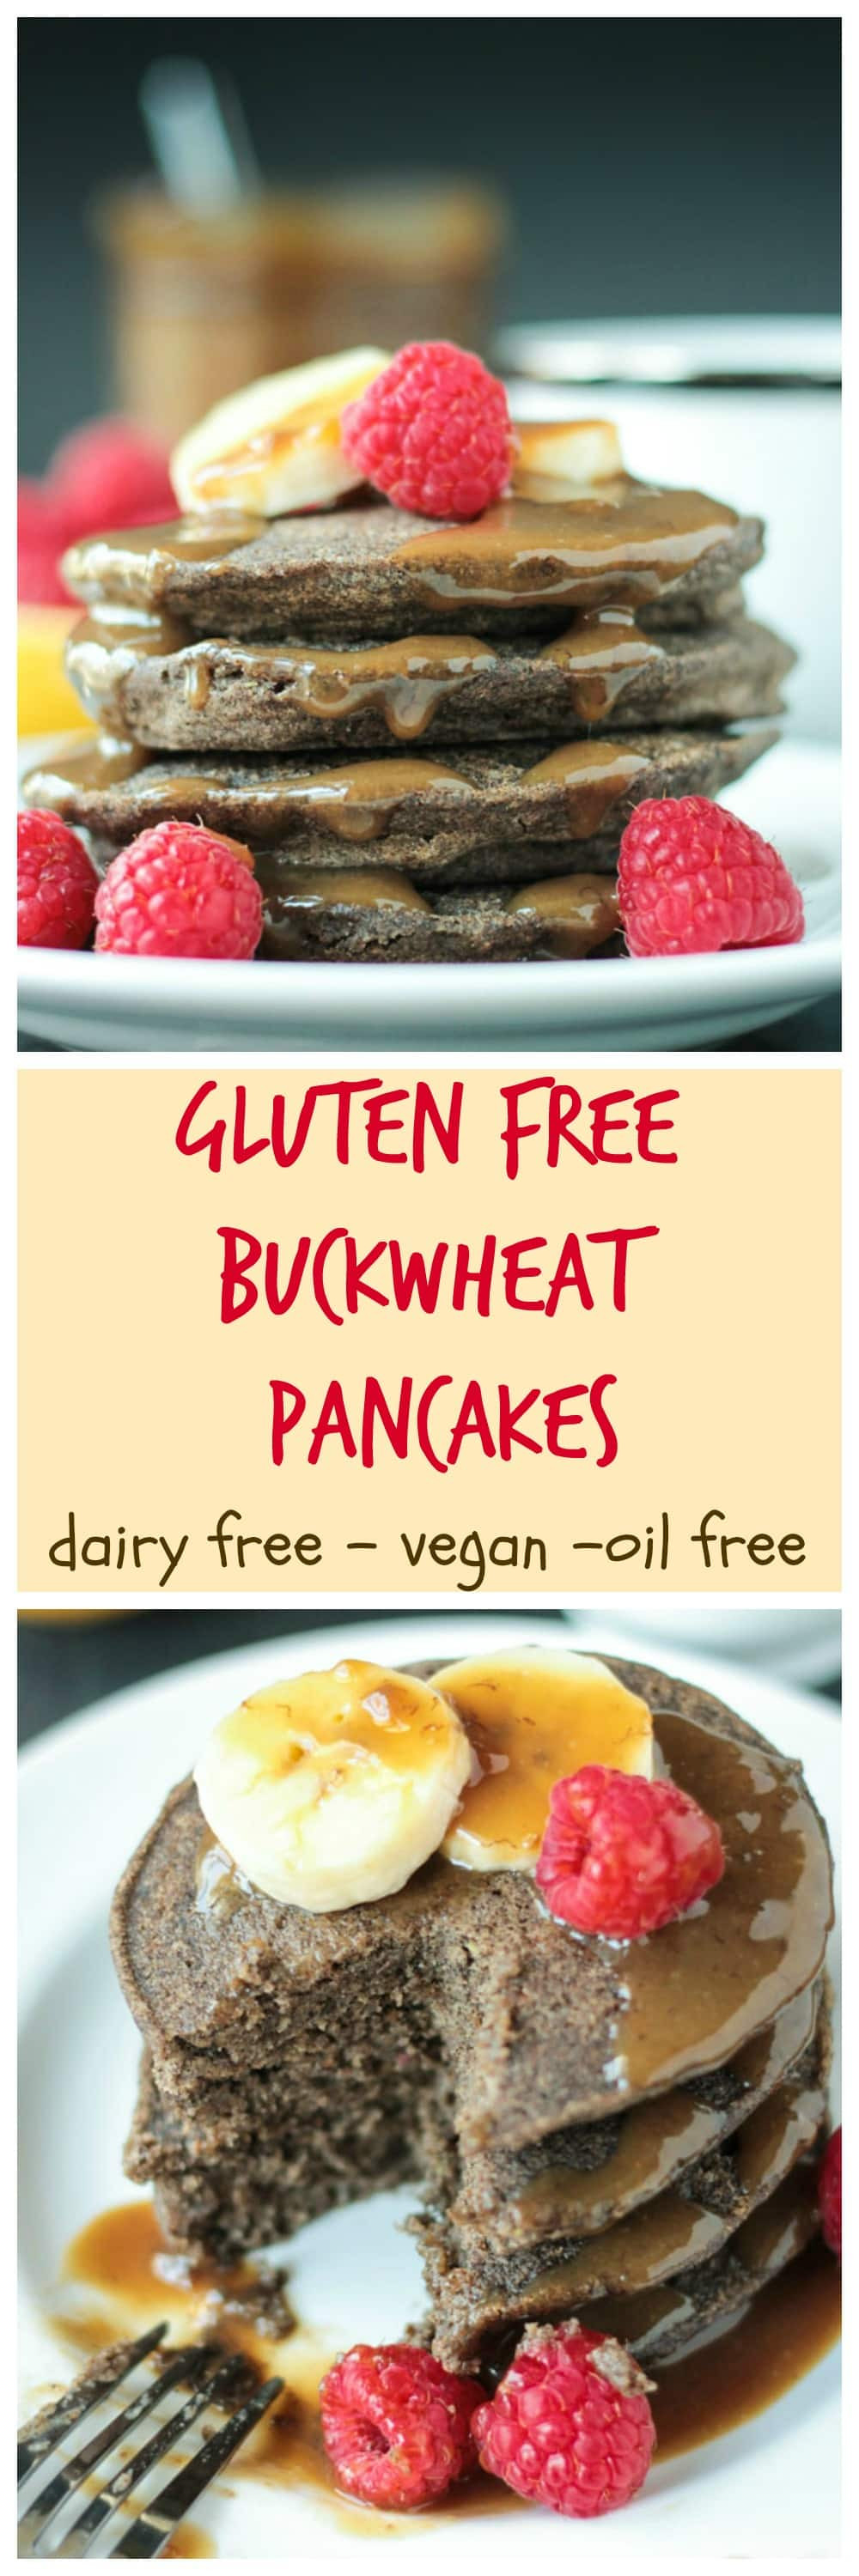 Buckwheat Pancakes Gluten Free
 Gluten Free Buckwheat Pancakes Veggie Inspired